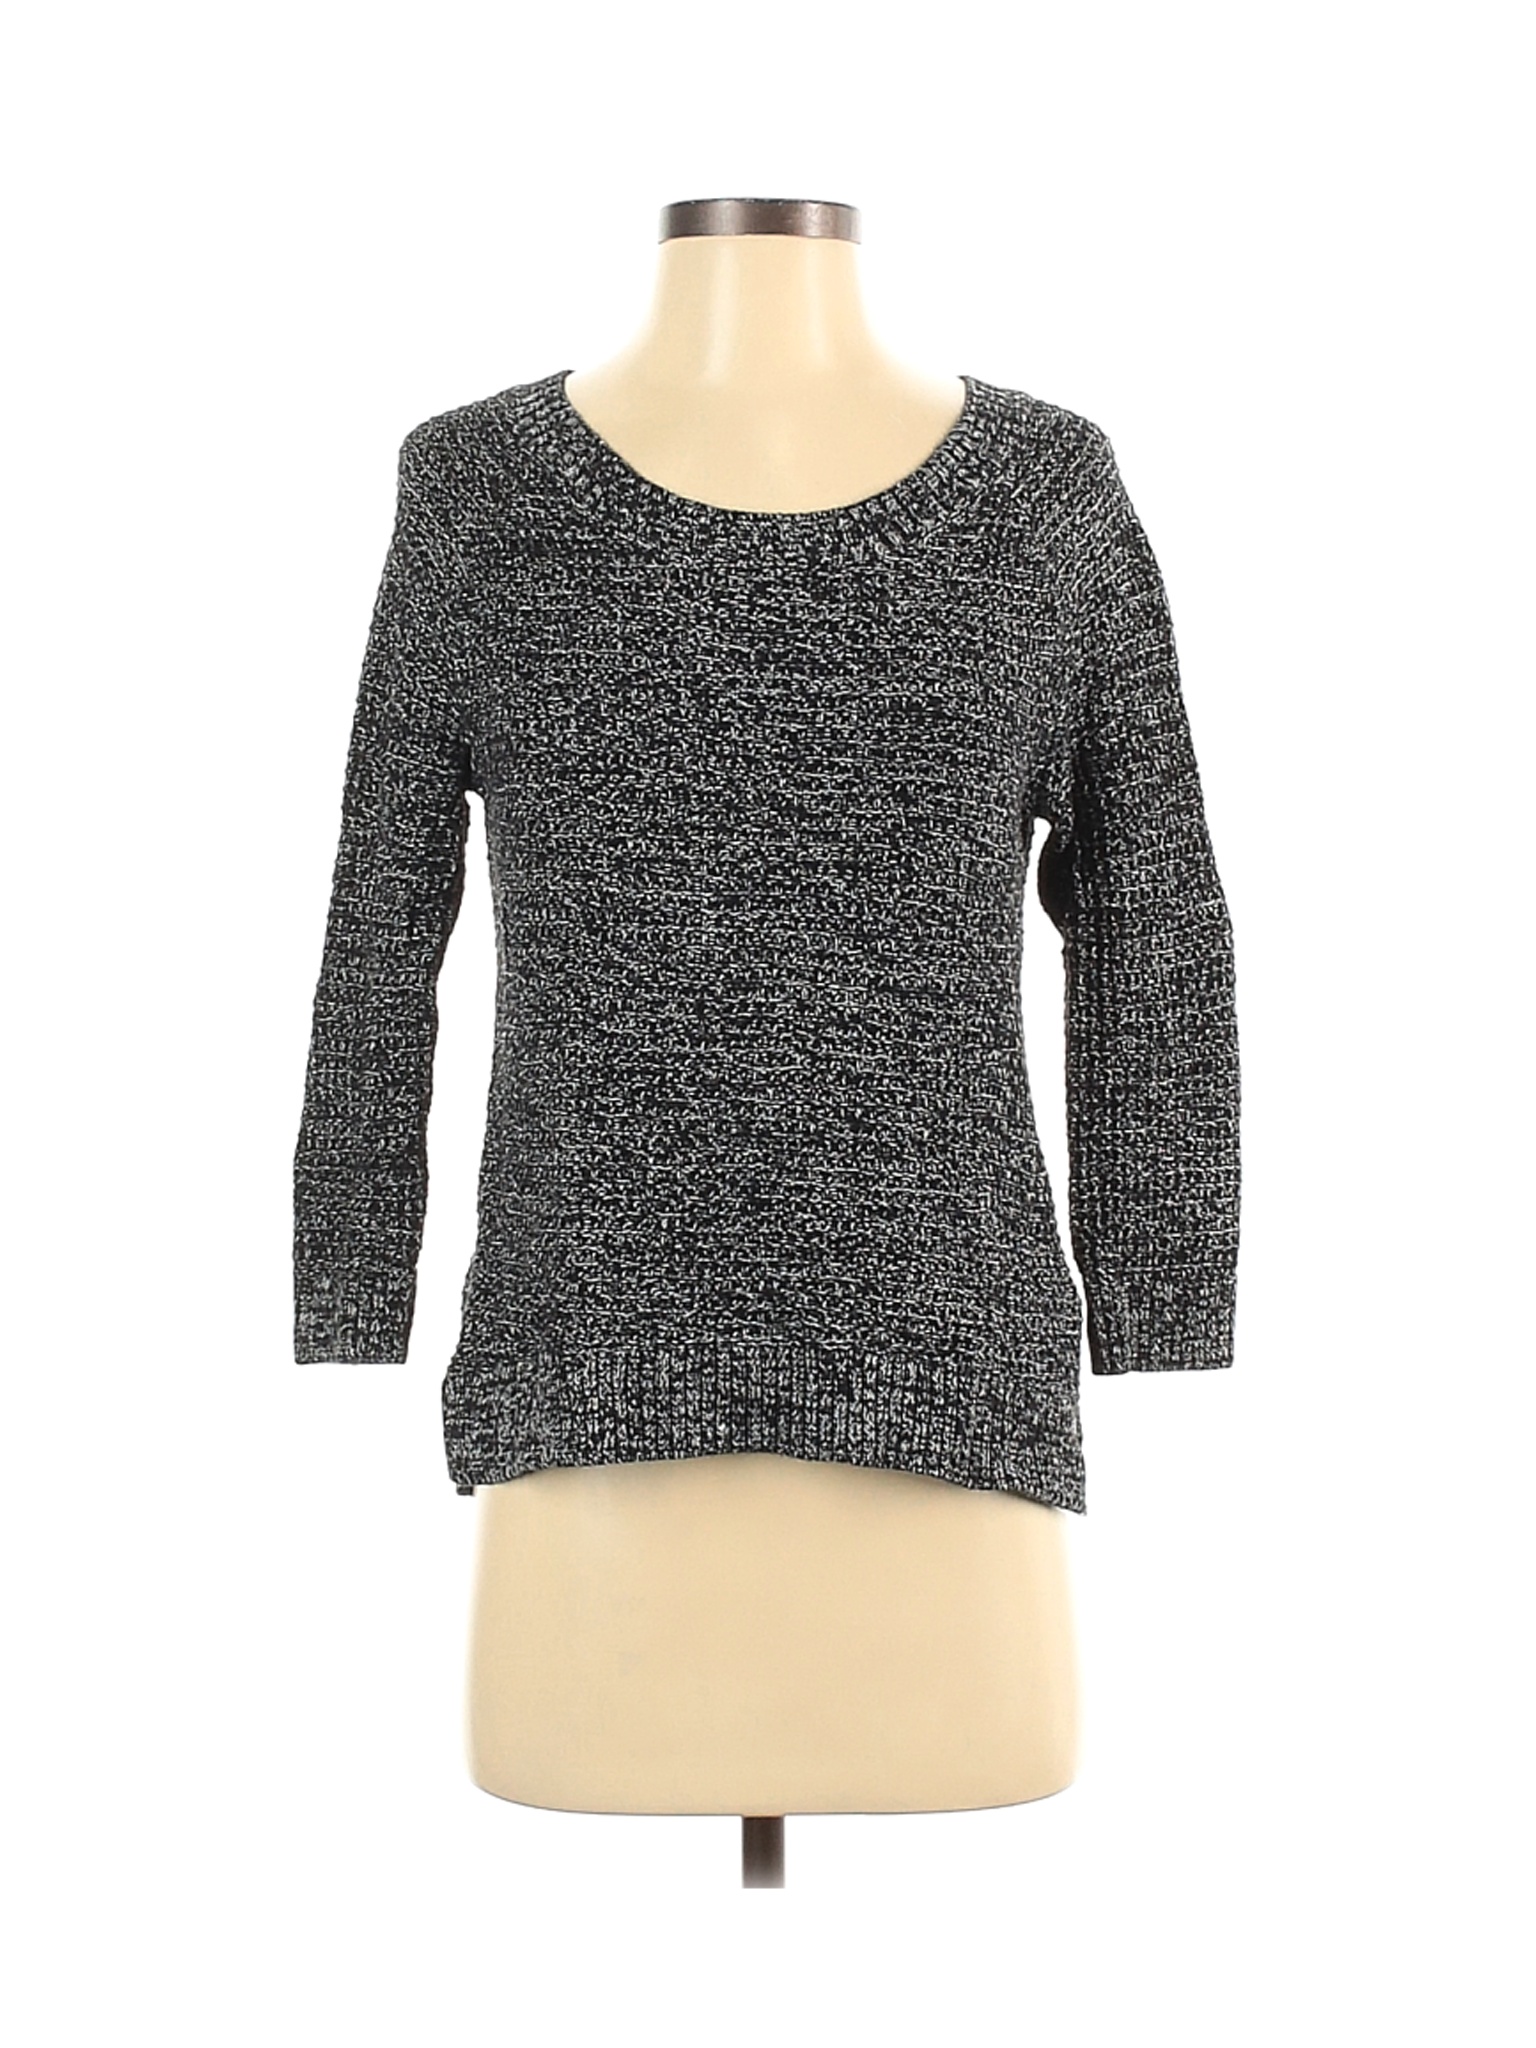 Banana Republic Factory Store Women Gray Pullover Sweater XS | eBay